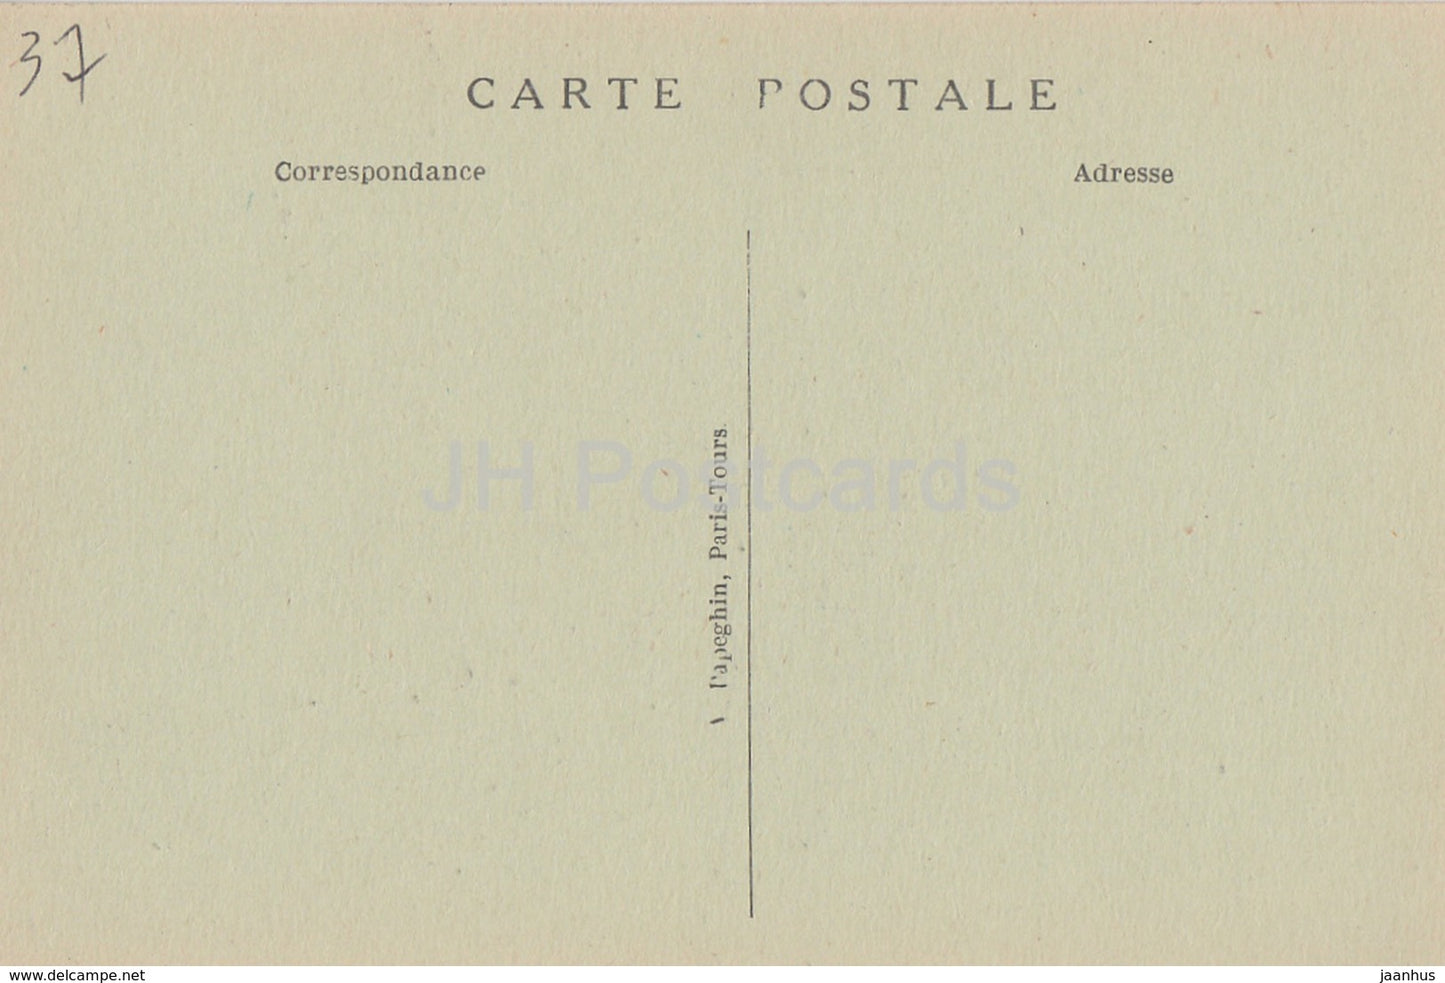 St Avertin - Chateau de Cange - castle - 30 - old postcard - France - unused